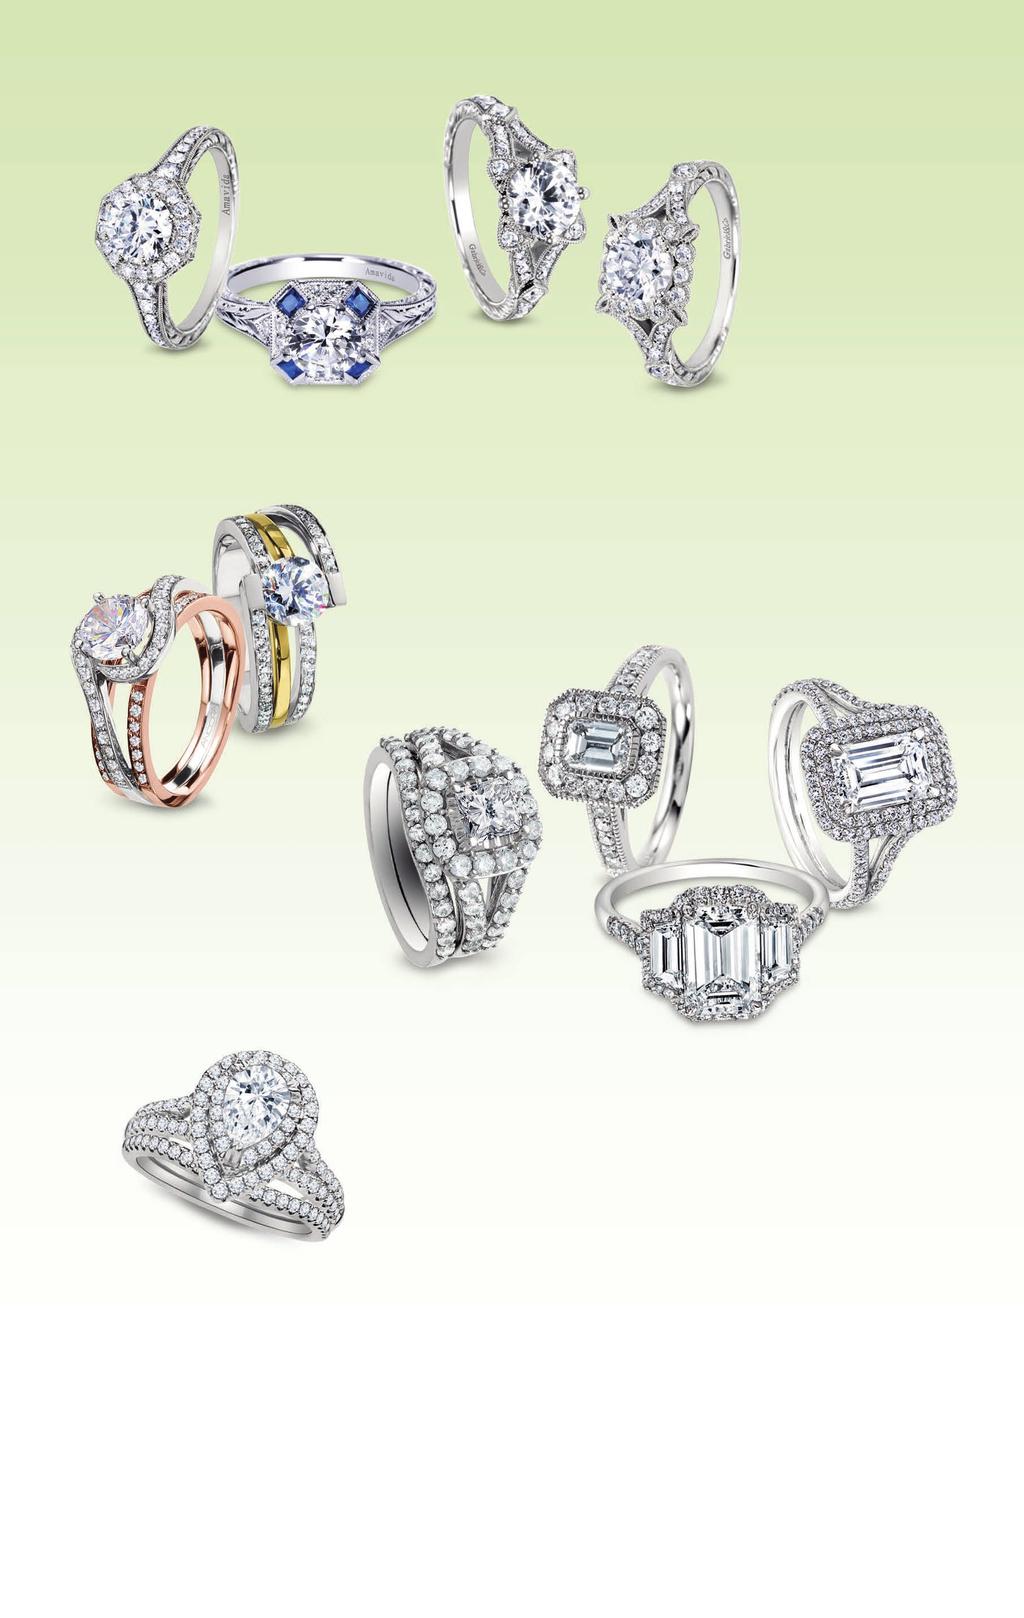 A H J G I K A. Platinum and diamond milgrain ring with 0.43ctw, $2,979*. Platinum and diamond milgrain ring with 0.24ctw sapphires and 0.09ctw diamonds, $2,150*. 14kt white gold milgrain ring with 0.